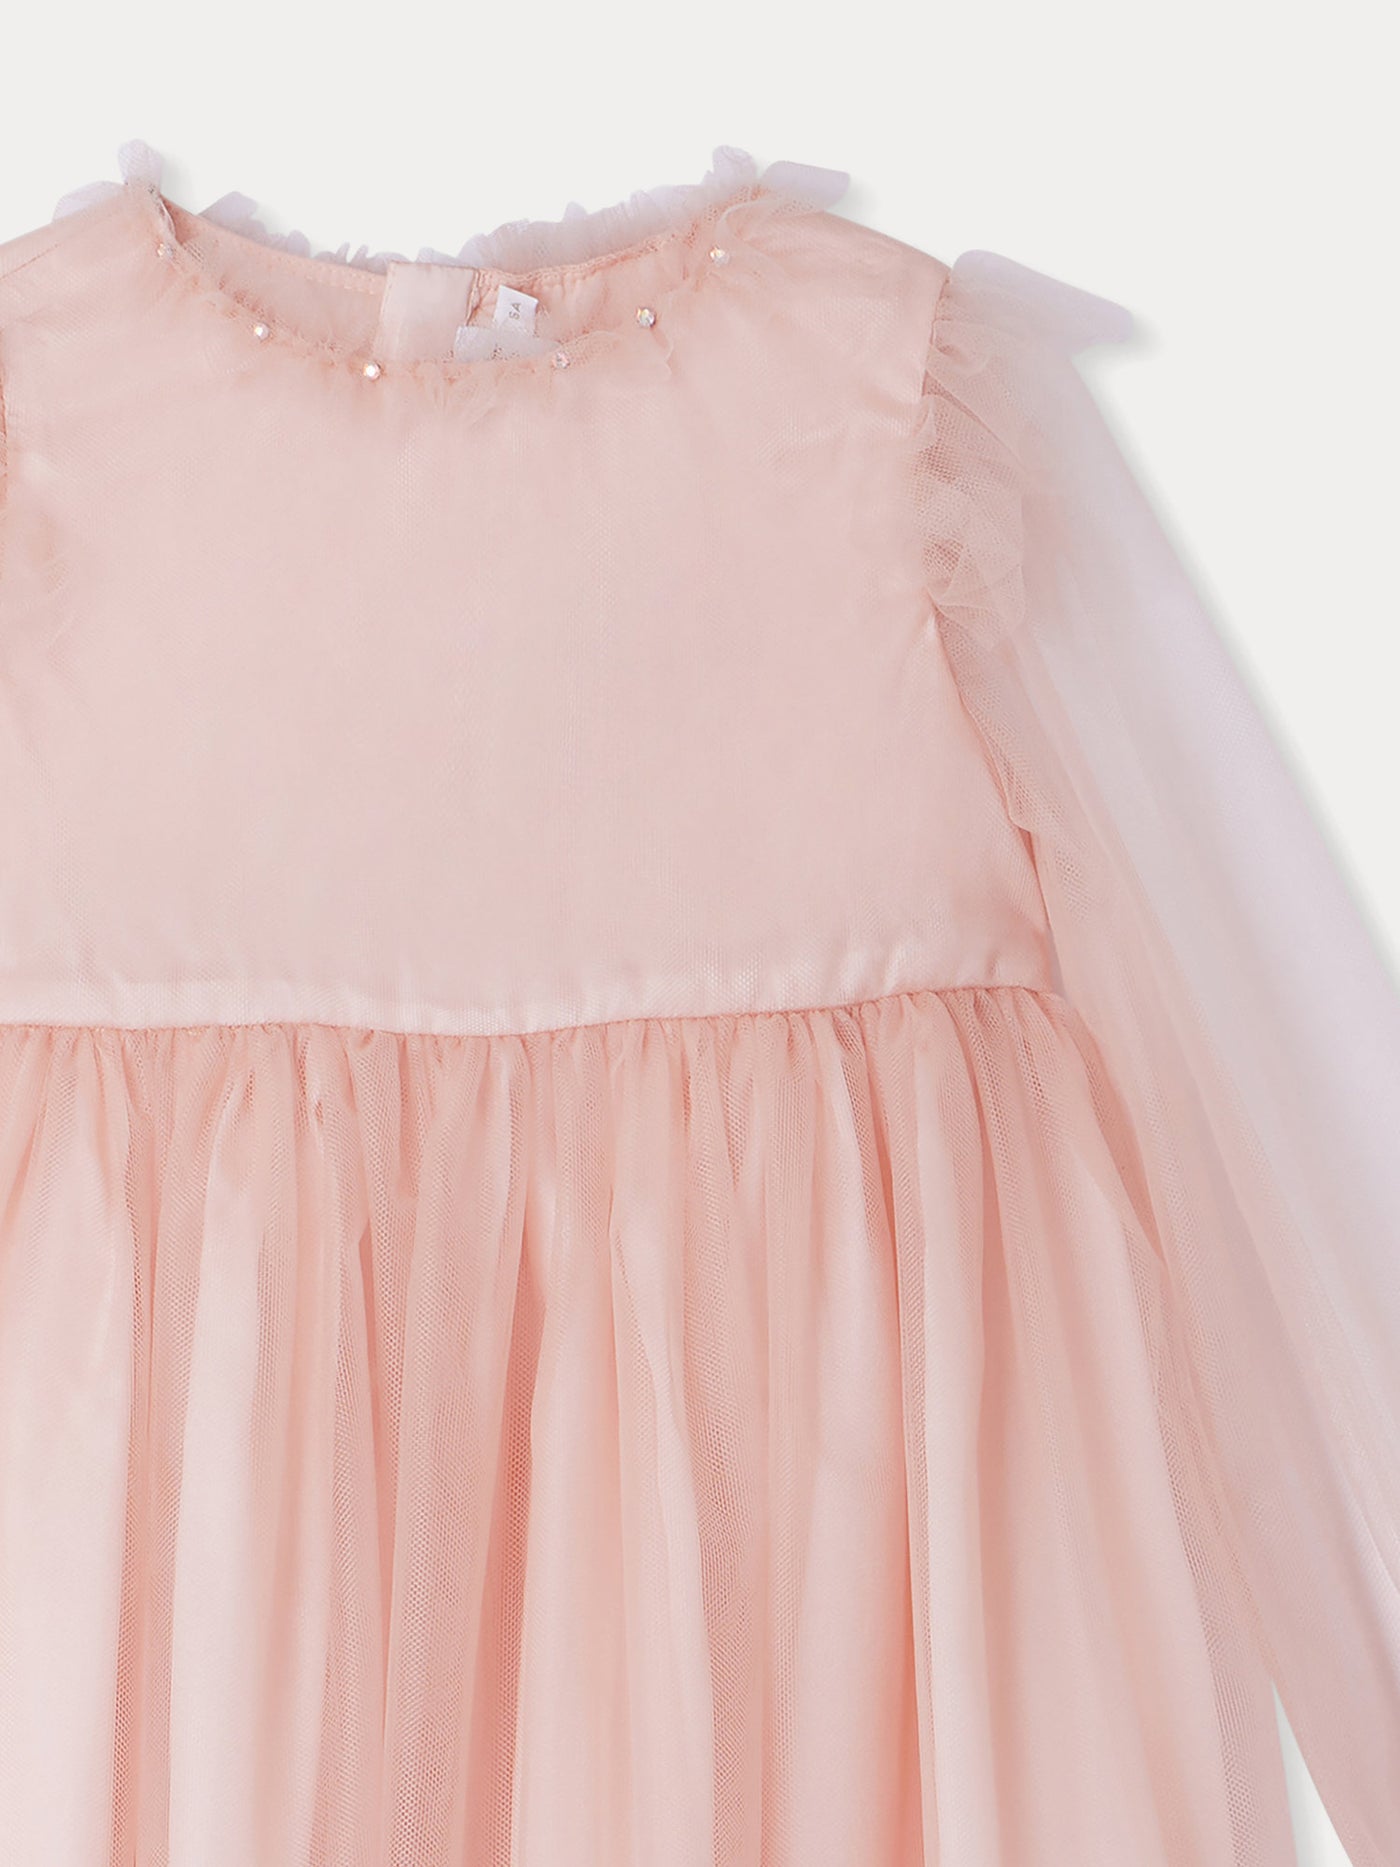 Dalia Dress faded pink